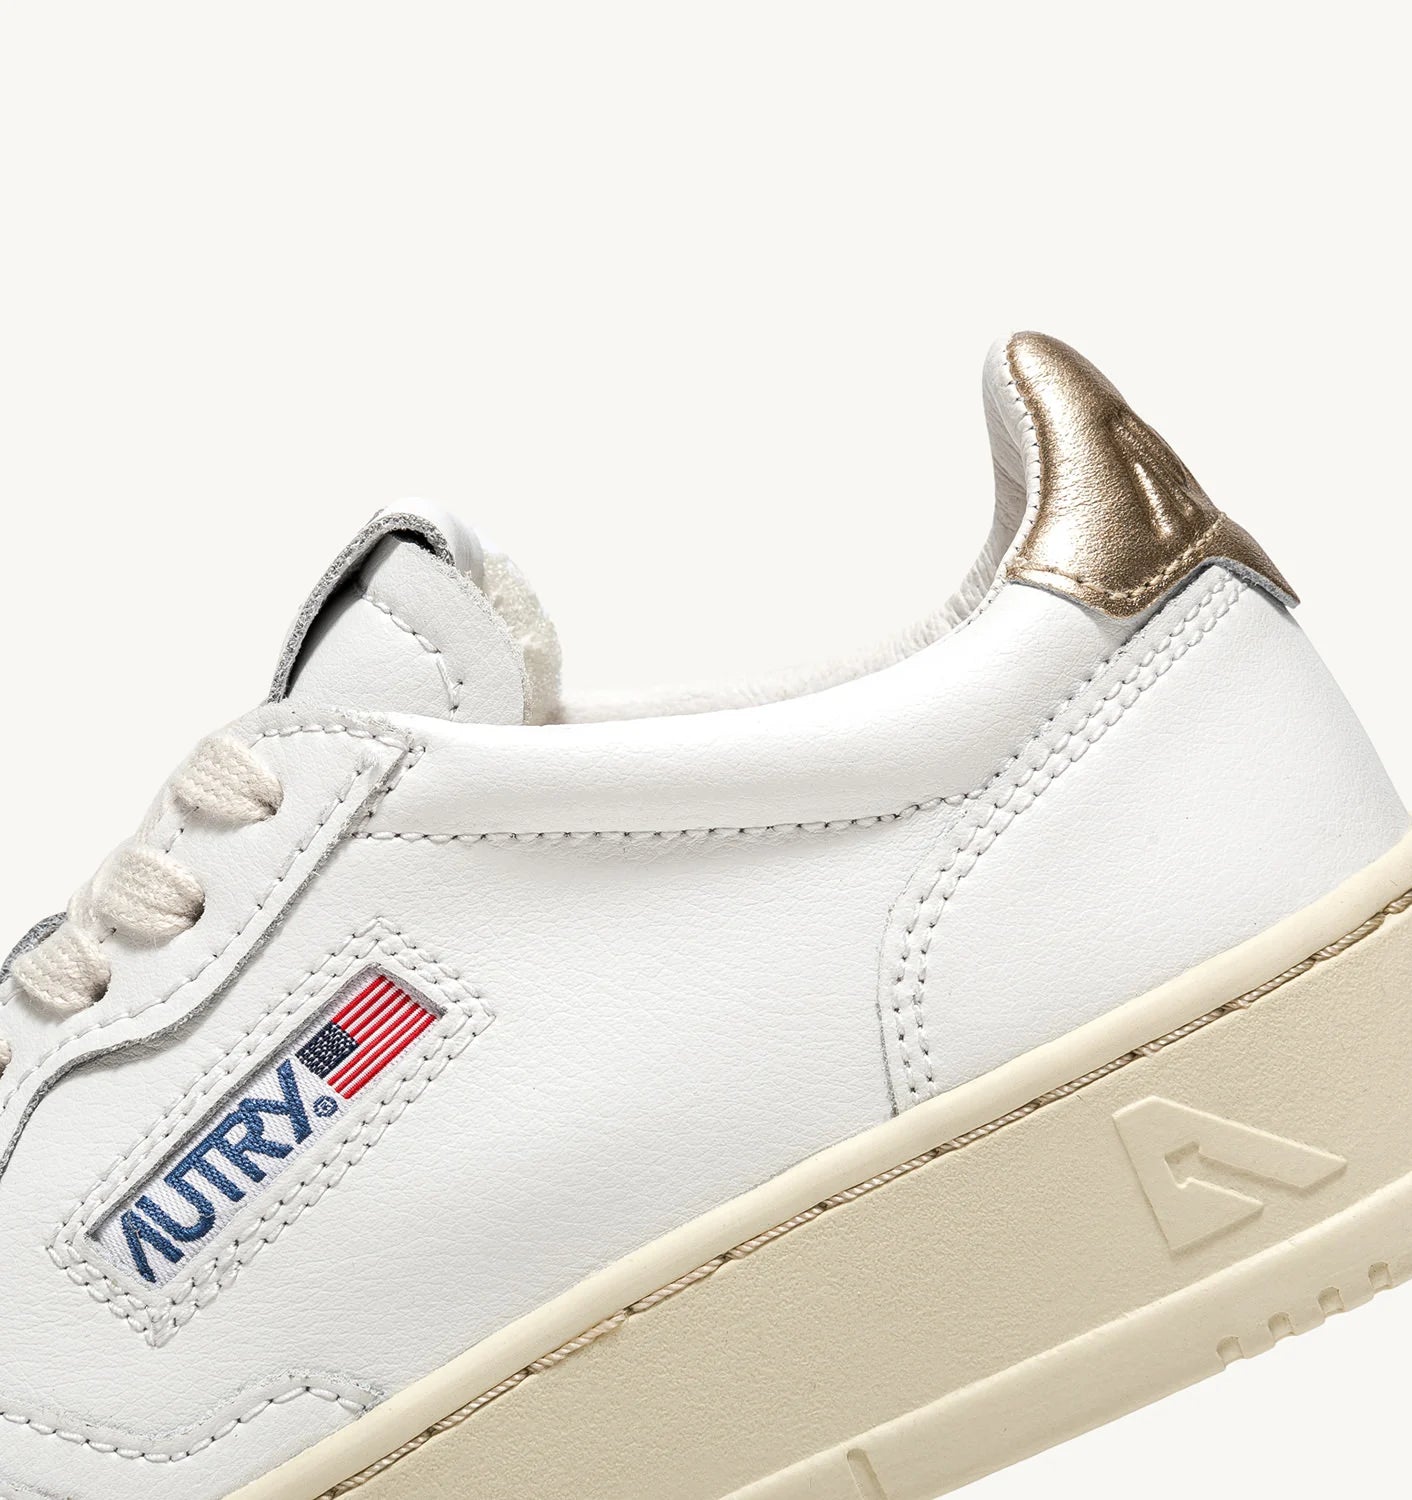 Autry LI06 White/Gold sneakers